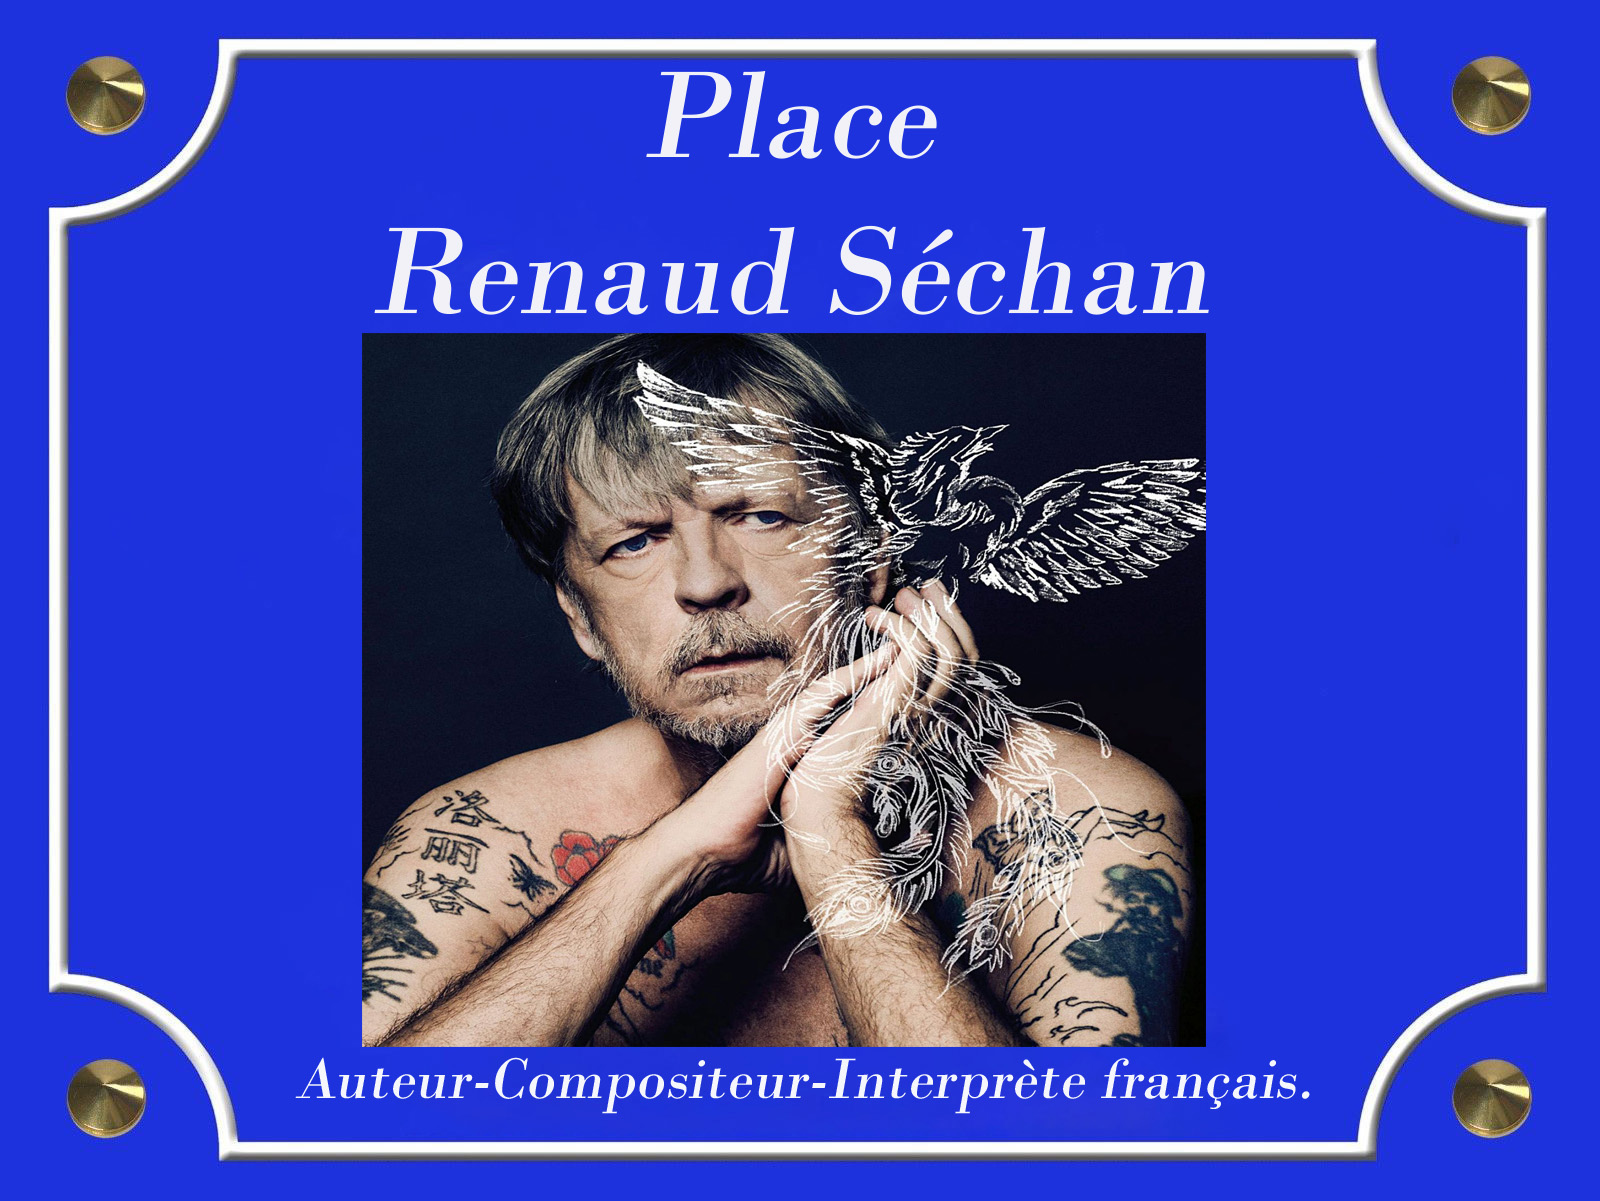 Place Renaud Sechan ok